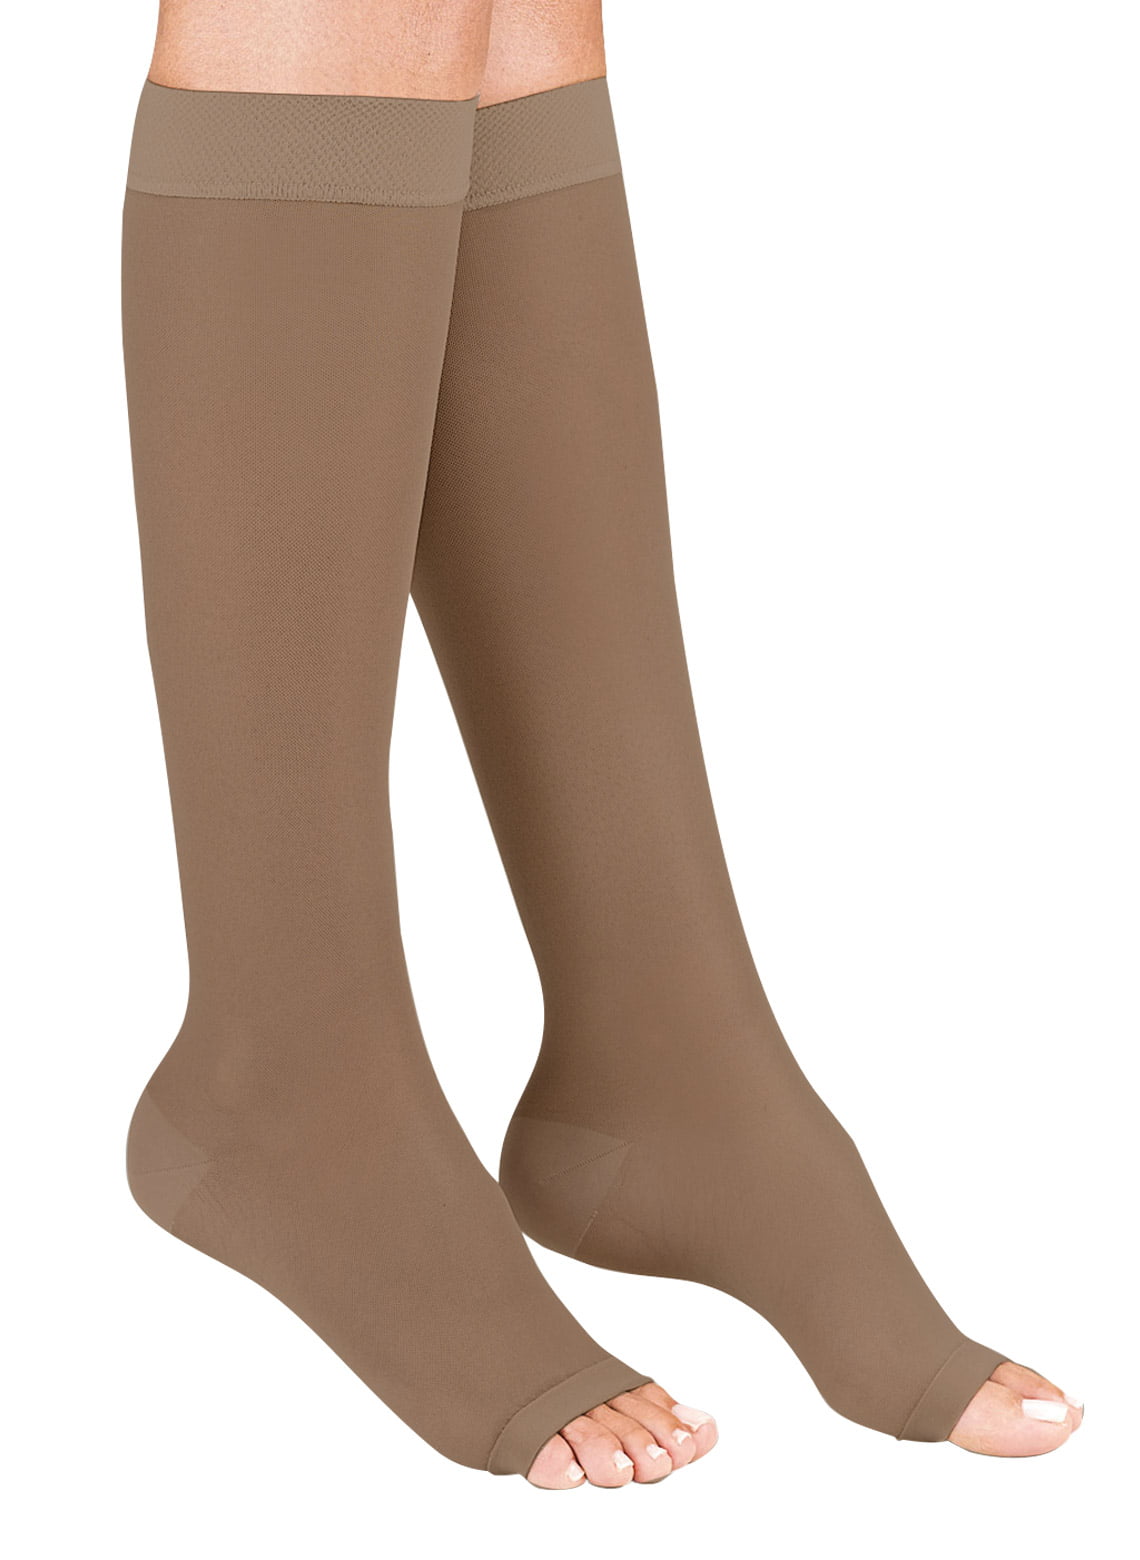 Tonus Elast Knee-High Medical Compression Stockings - Open Toe